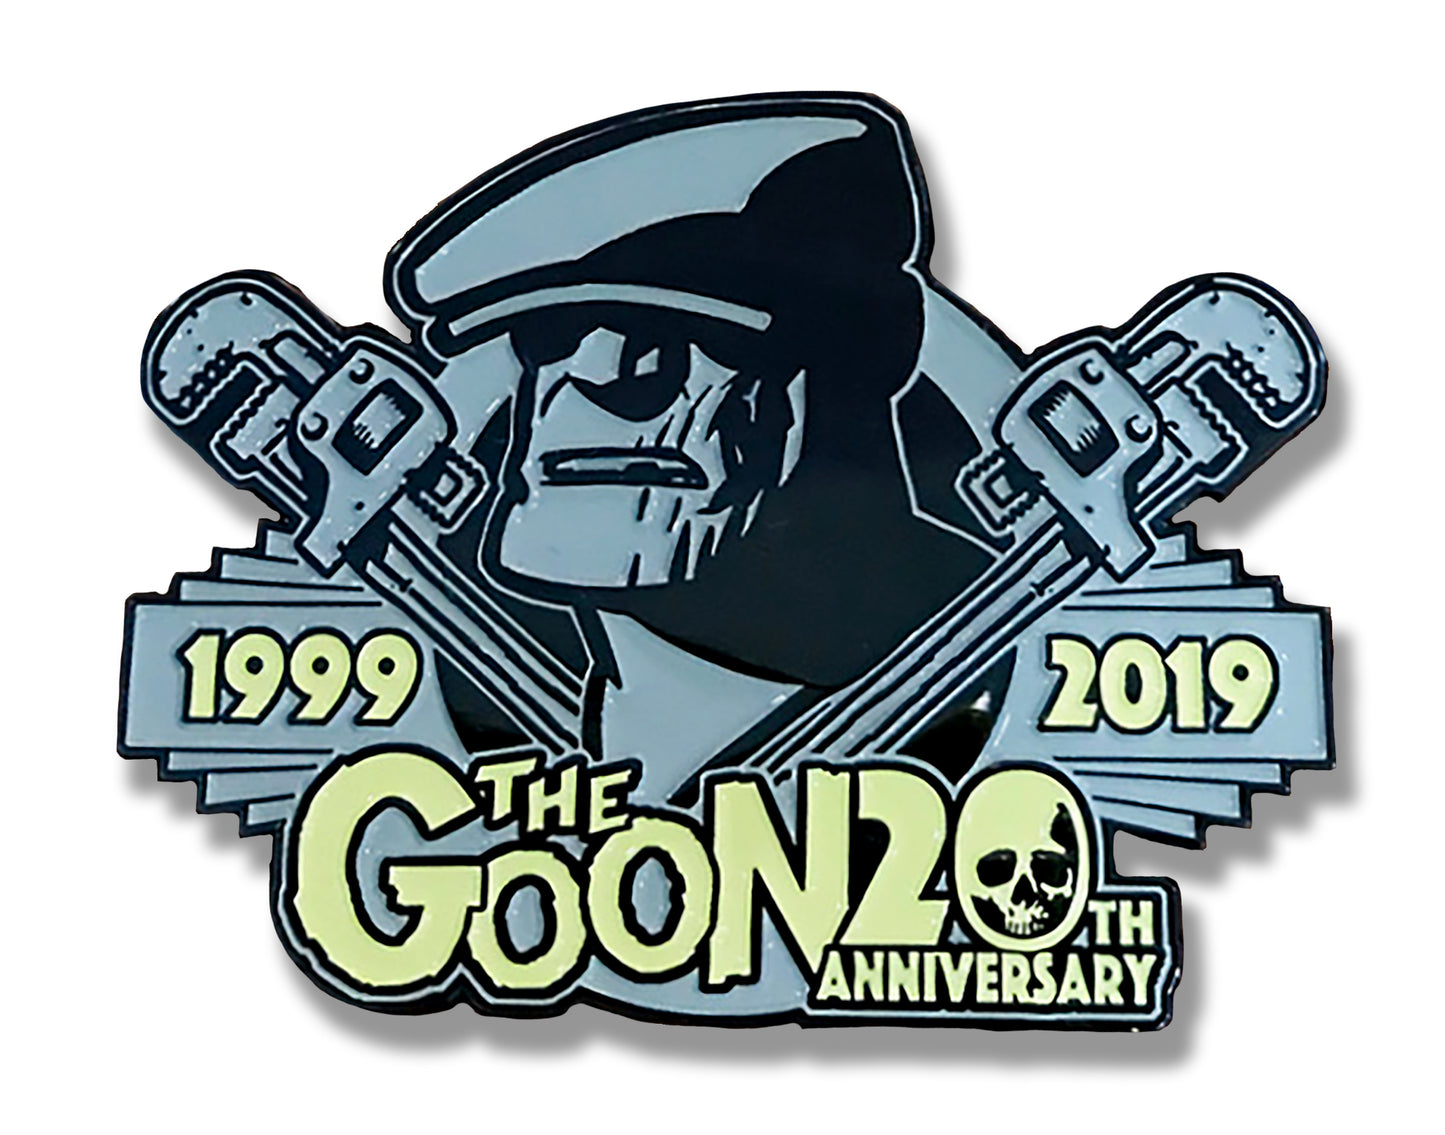 Goon 20th Anniversary lapel pin